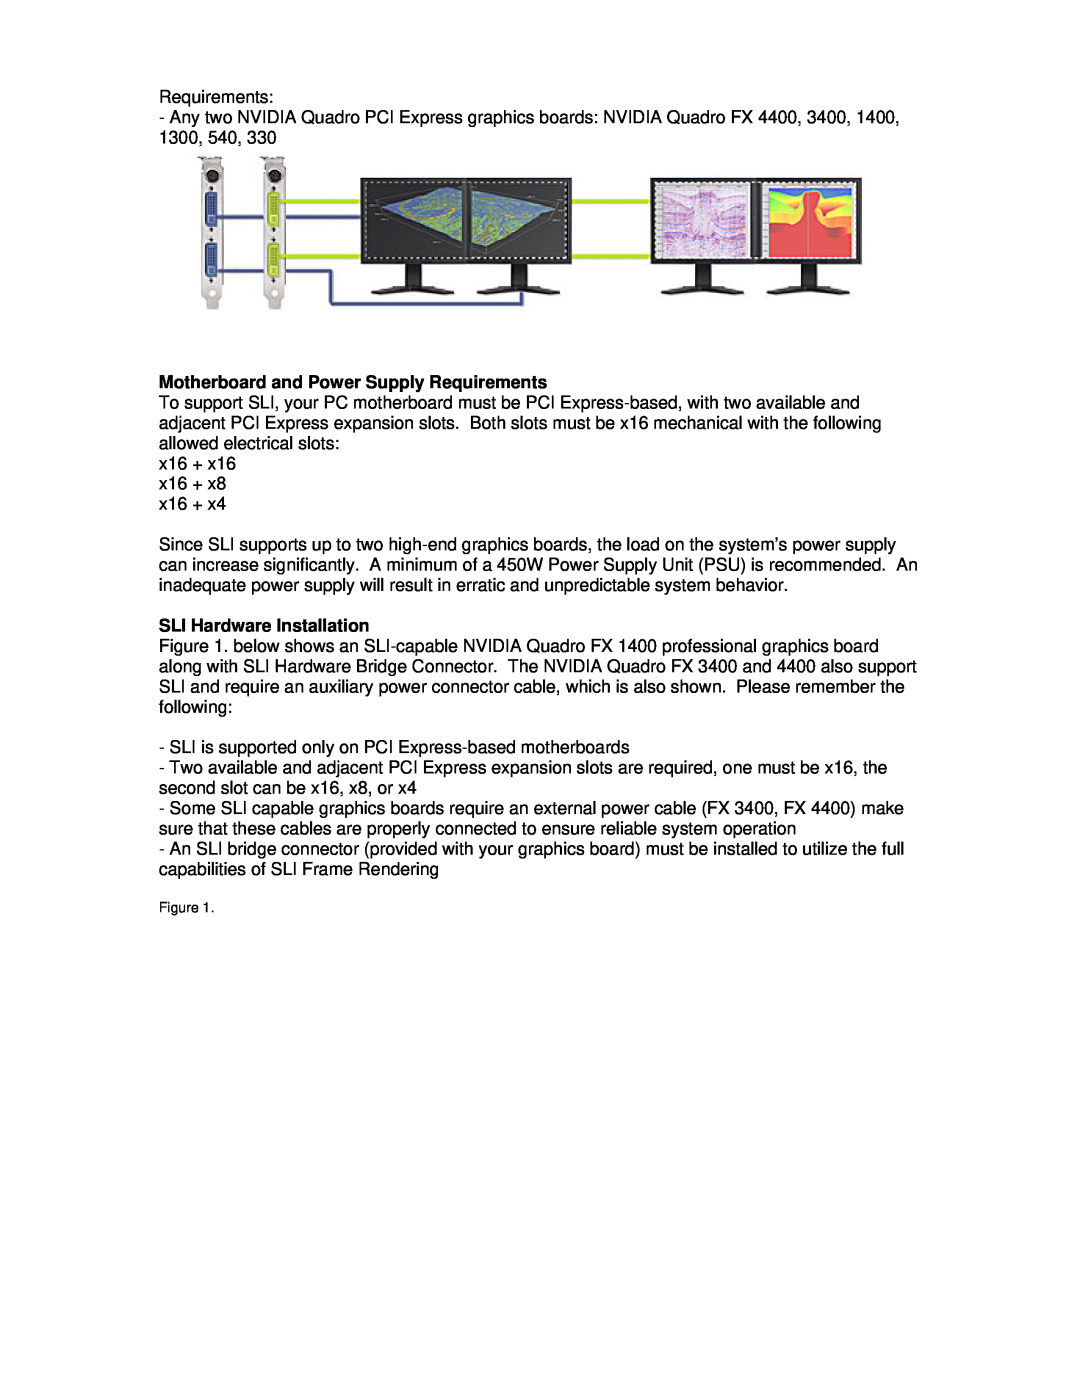 Nvidia NVIDIA Quadro manual Motherboard and Power Supply Requirements, SLI Hardware Installation 